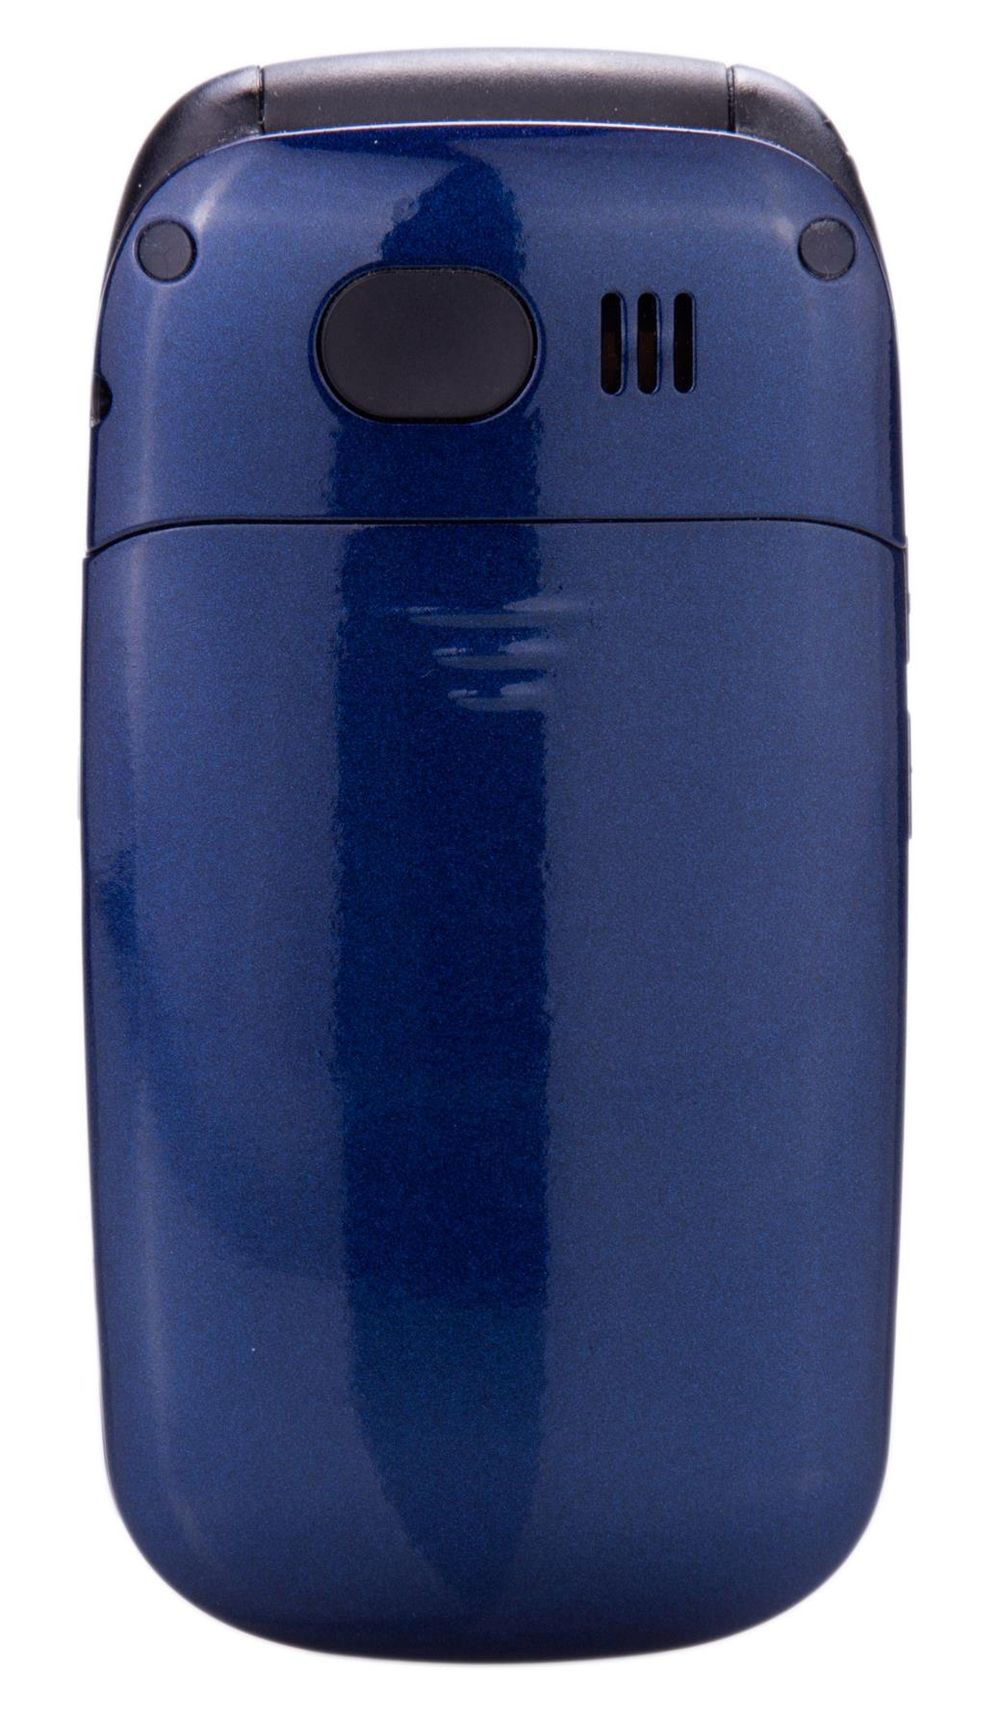 TTfone TT750 Lunar BLUE Flip Folding Dual Screen Big Button Mobile Phone with Dock Charger and Vodafone Sim Card